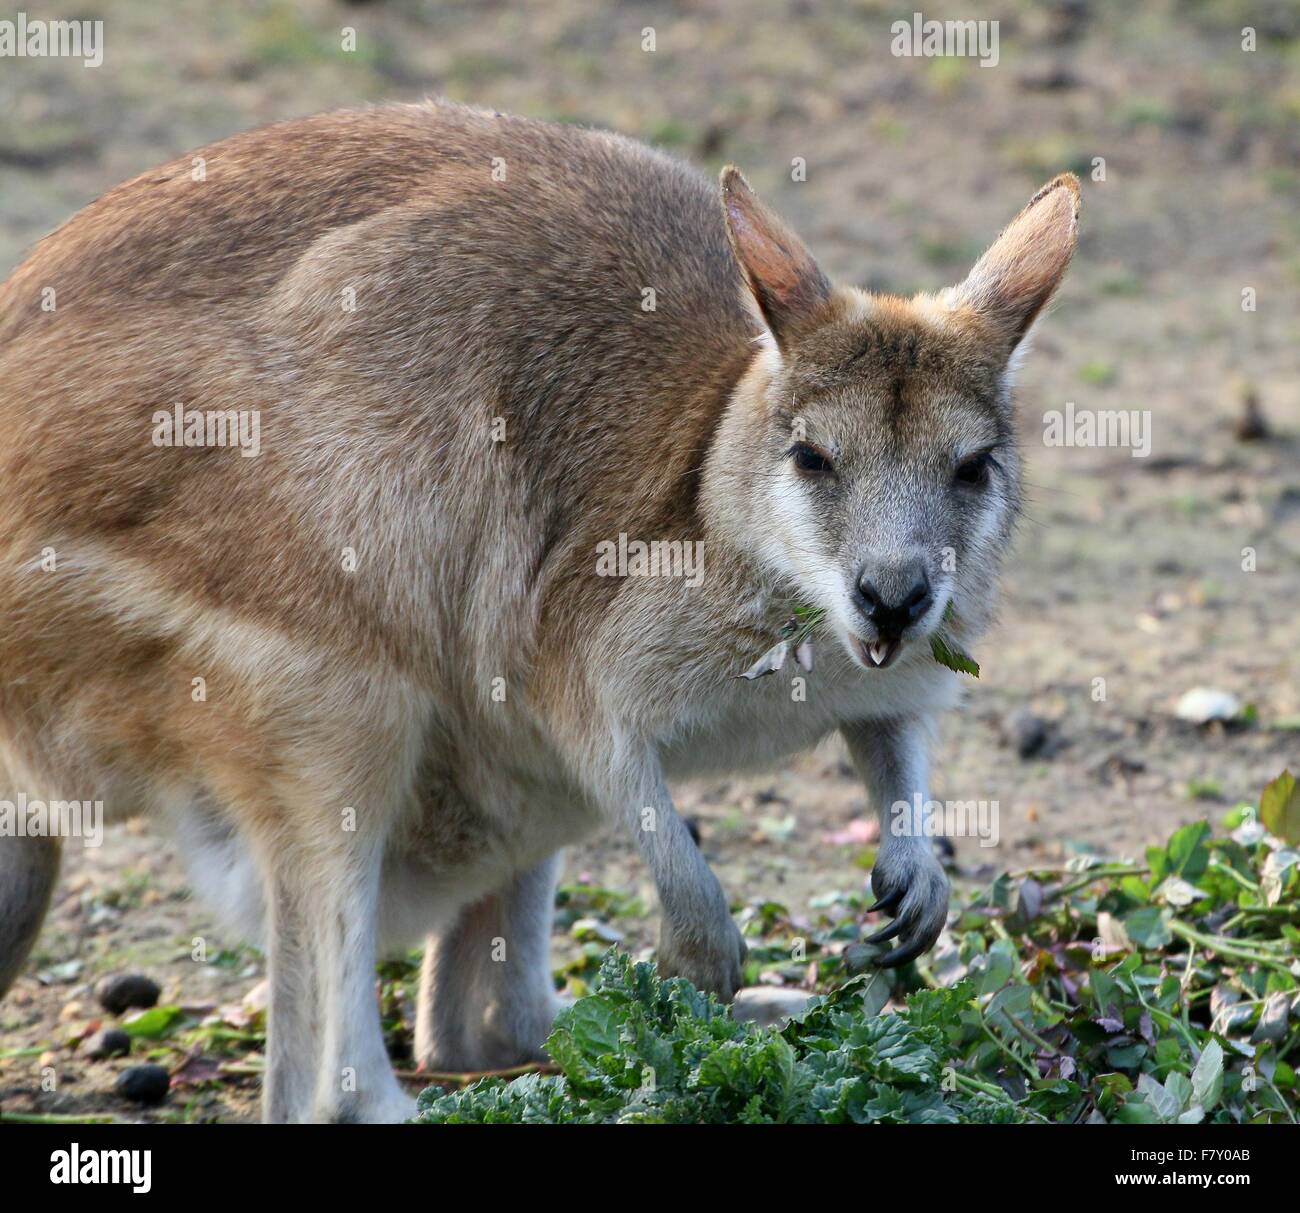 North Australian Agile or Sandy wallaby (Macropus agilis), feeding on leaves Stock Photo